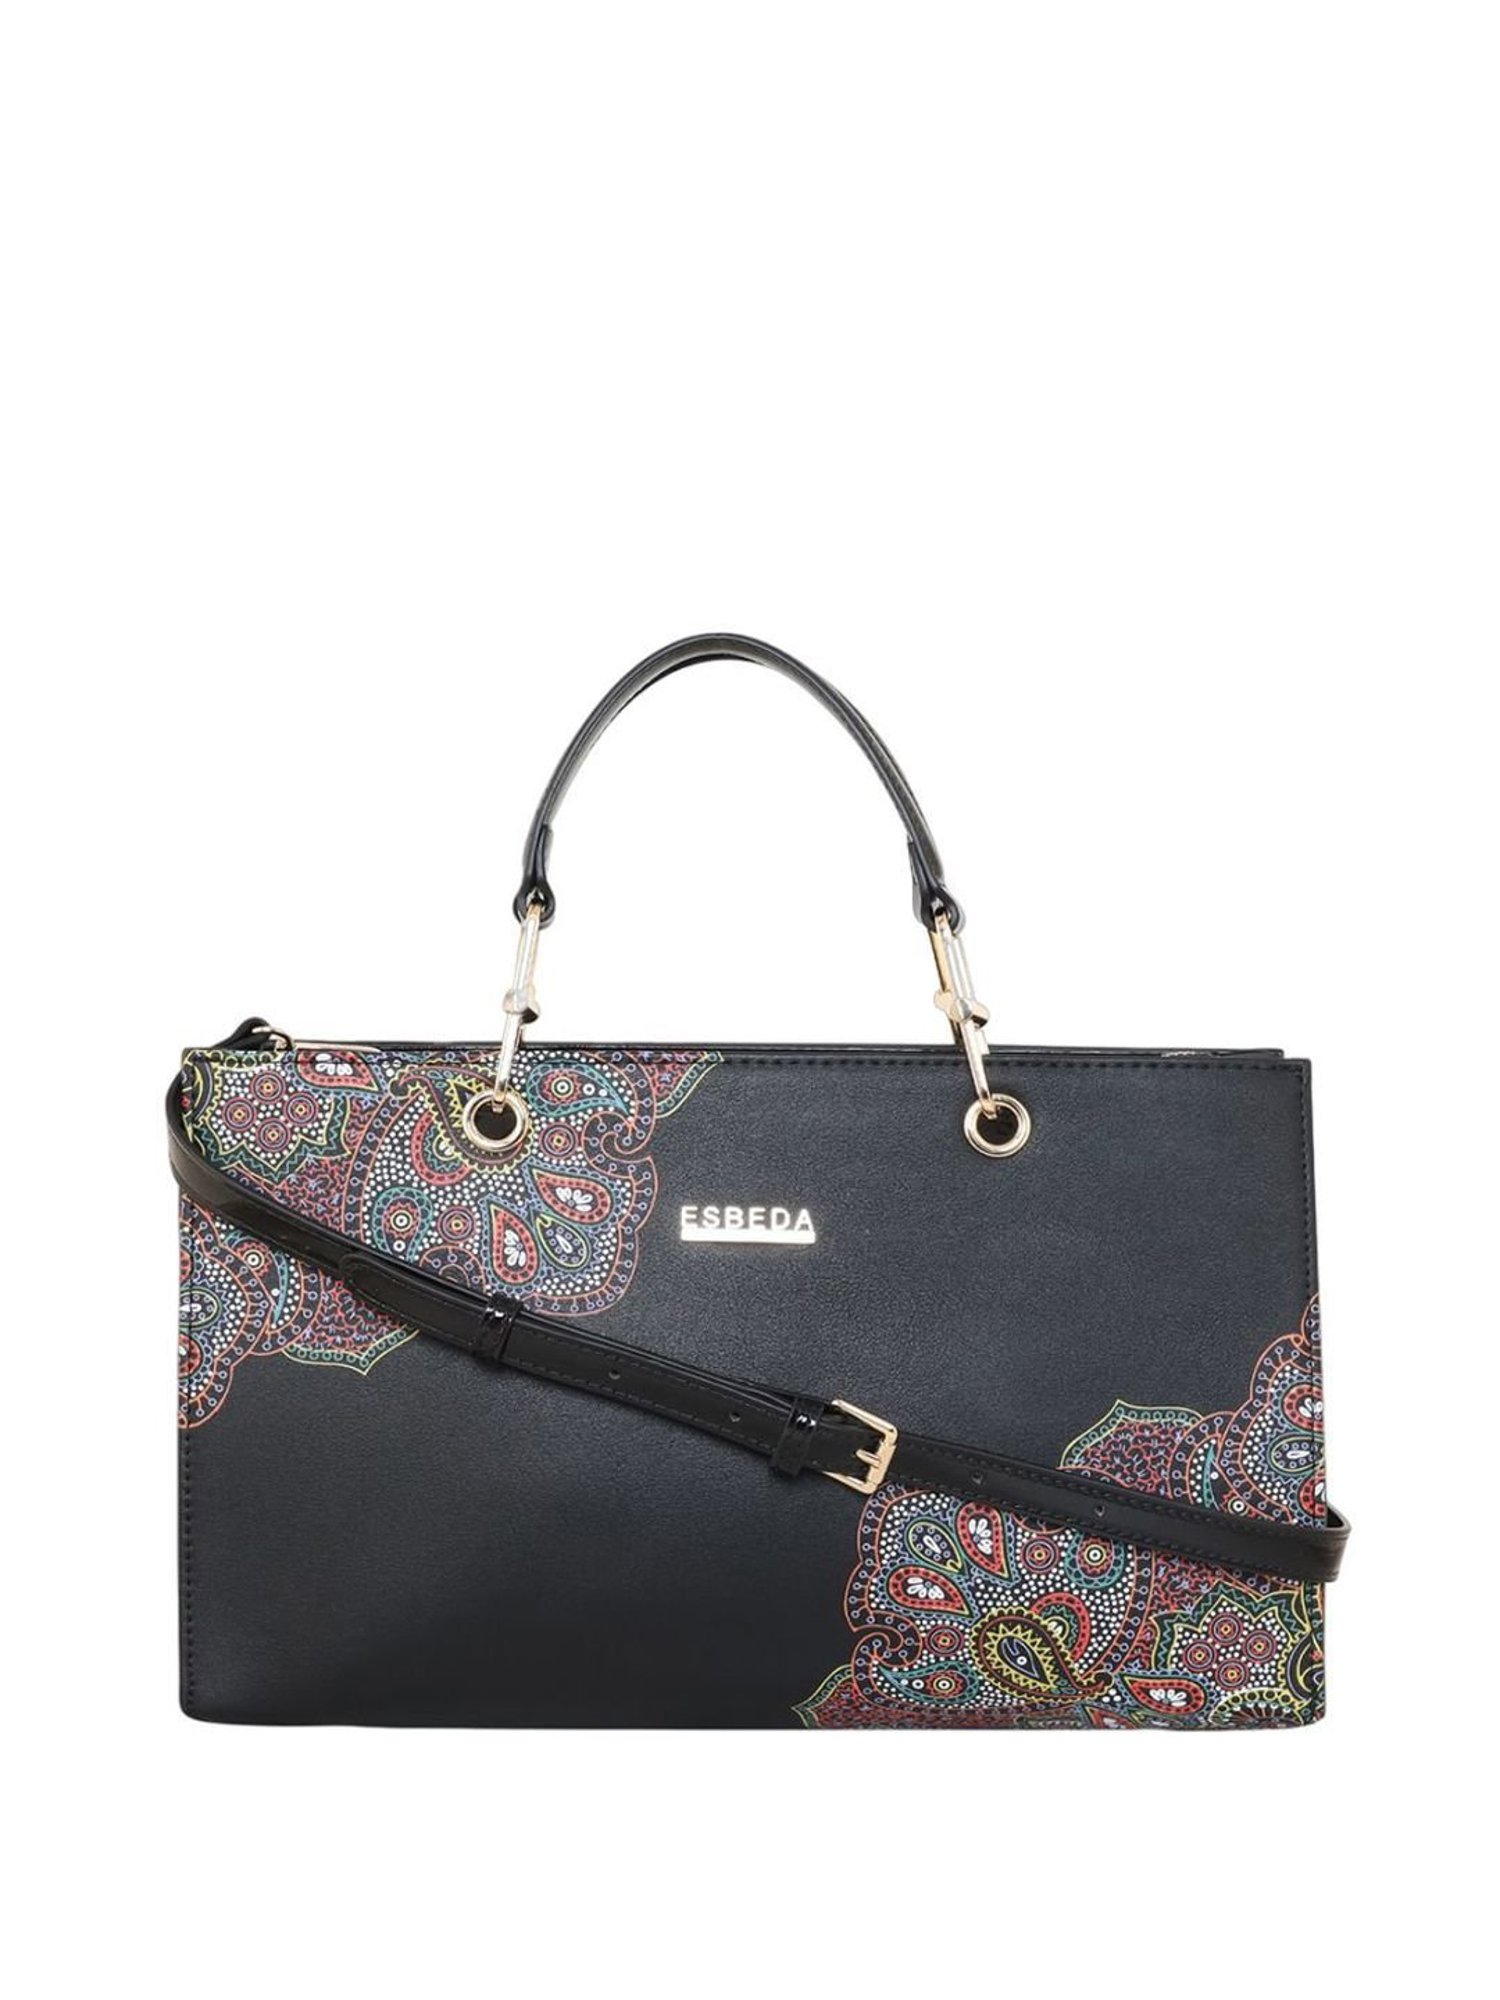 ESBEDA Black Color Glossy shell Lightweight Handbag For Women